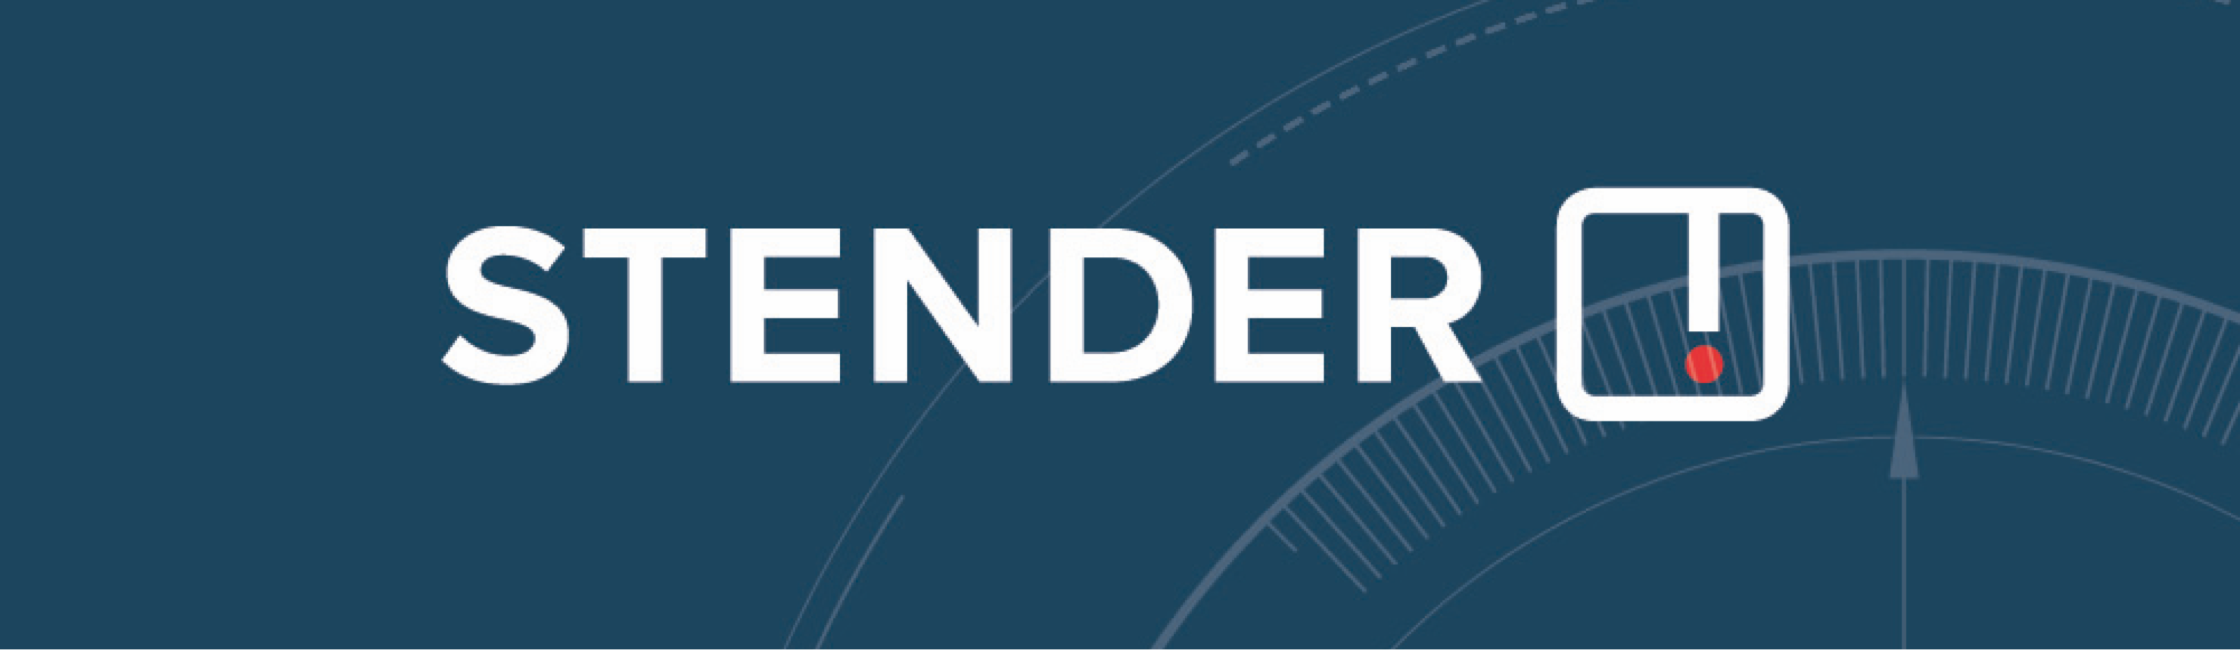 Stender GmbH Logo